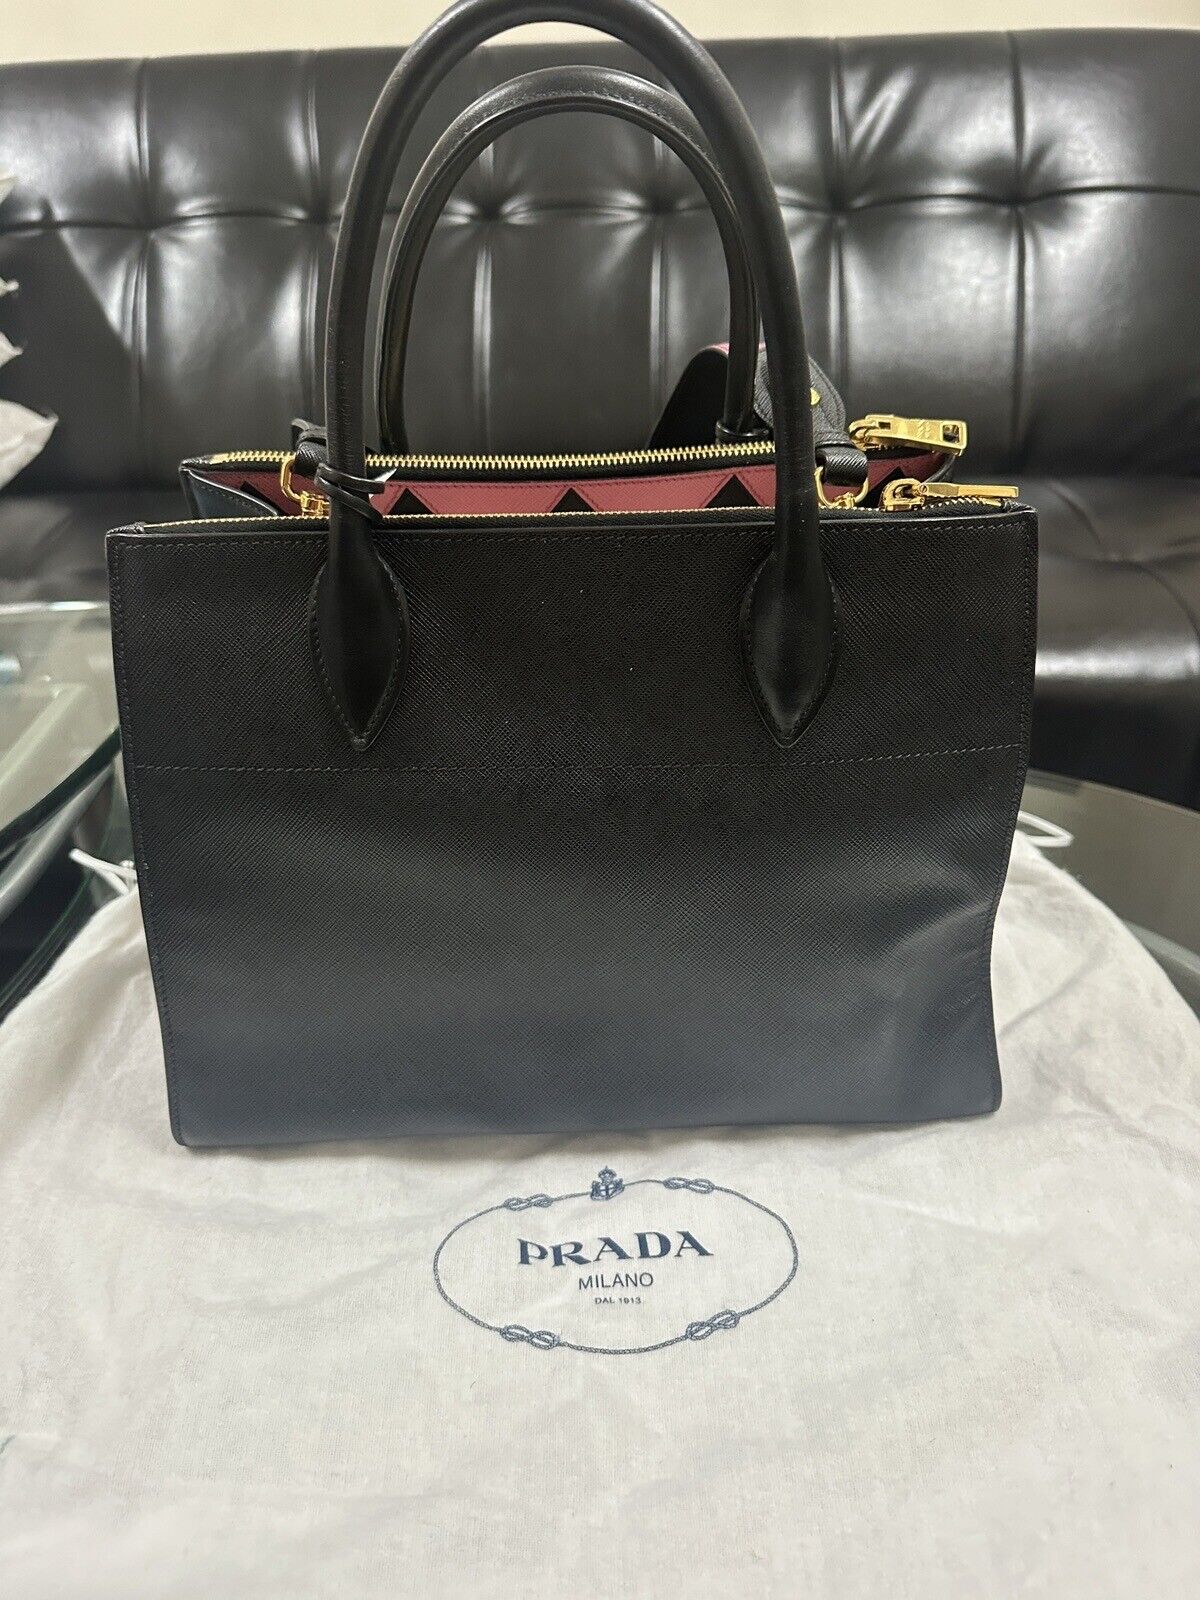 PRADA Saffiano Leather Zip Tote Handbag Purse wit… - image 9